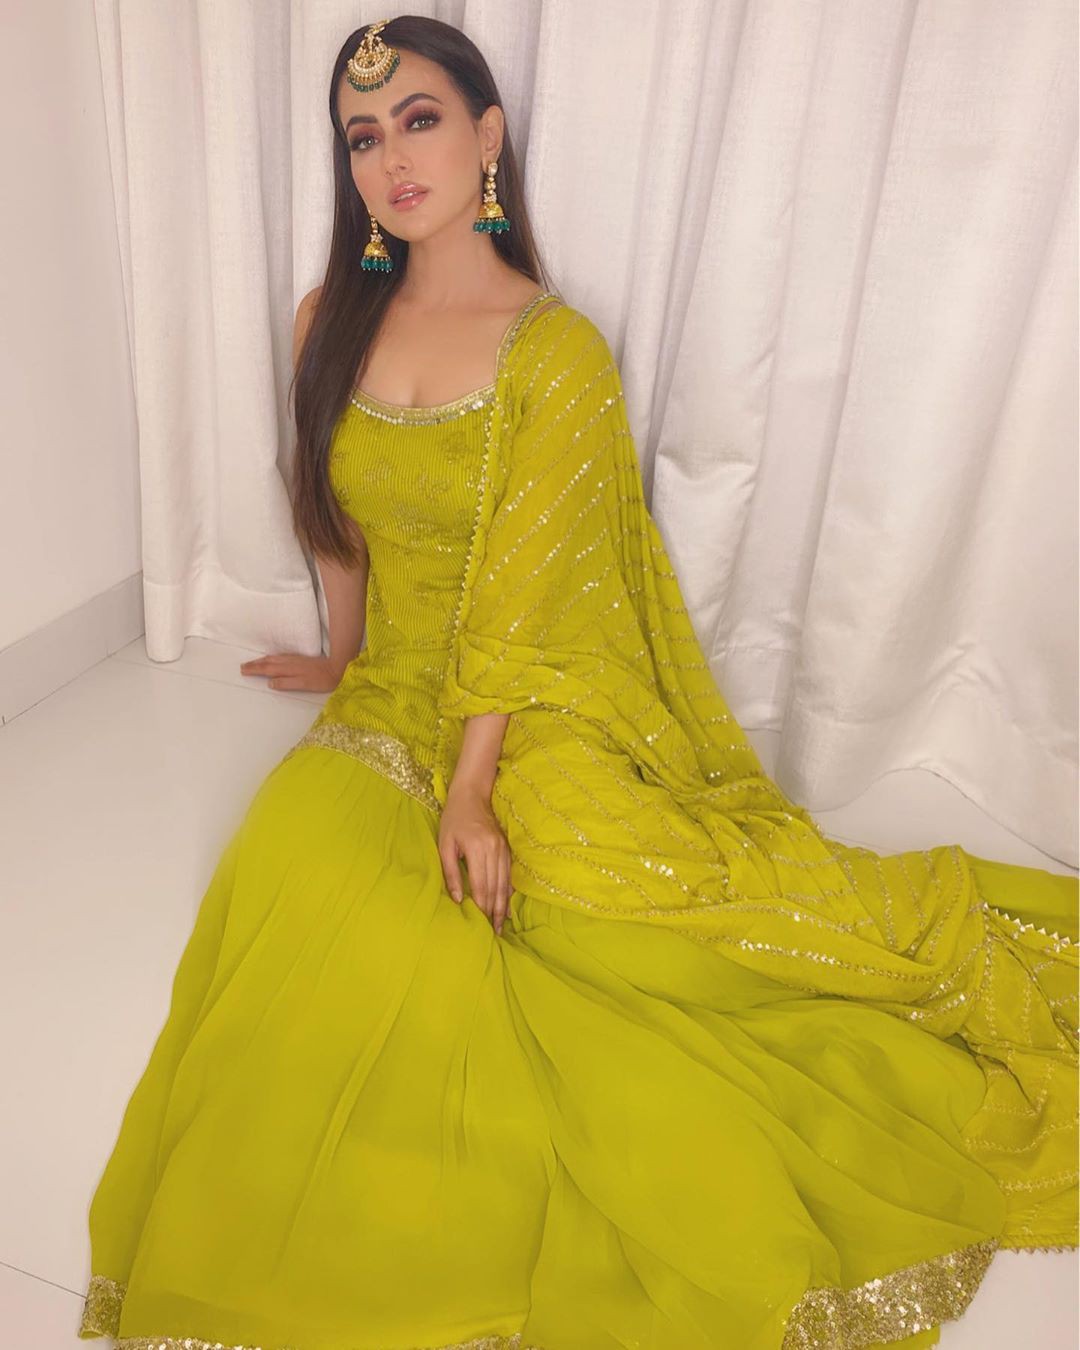 Stunning Sana Khan Photographs, Internet Star | Sana Khan Instagram ...